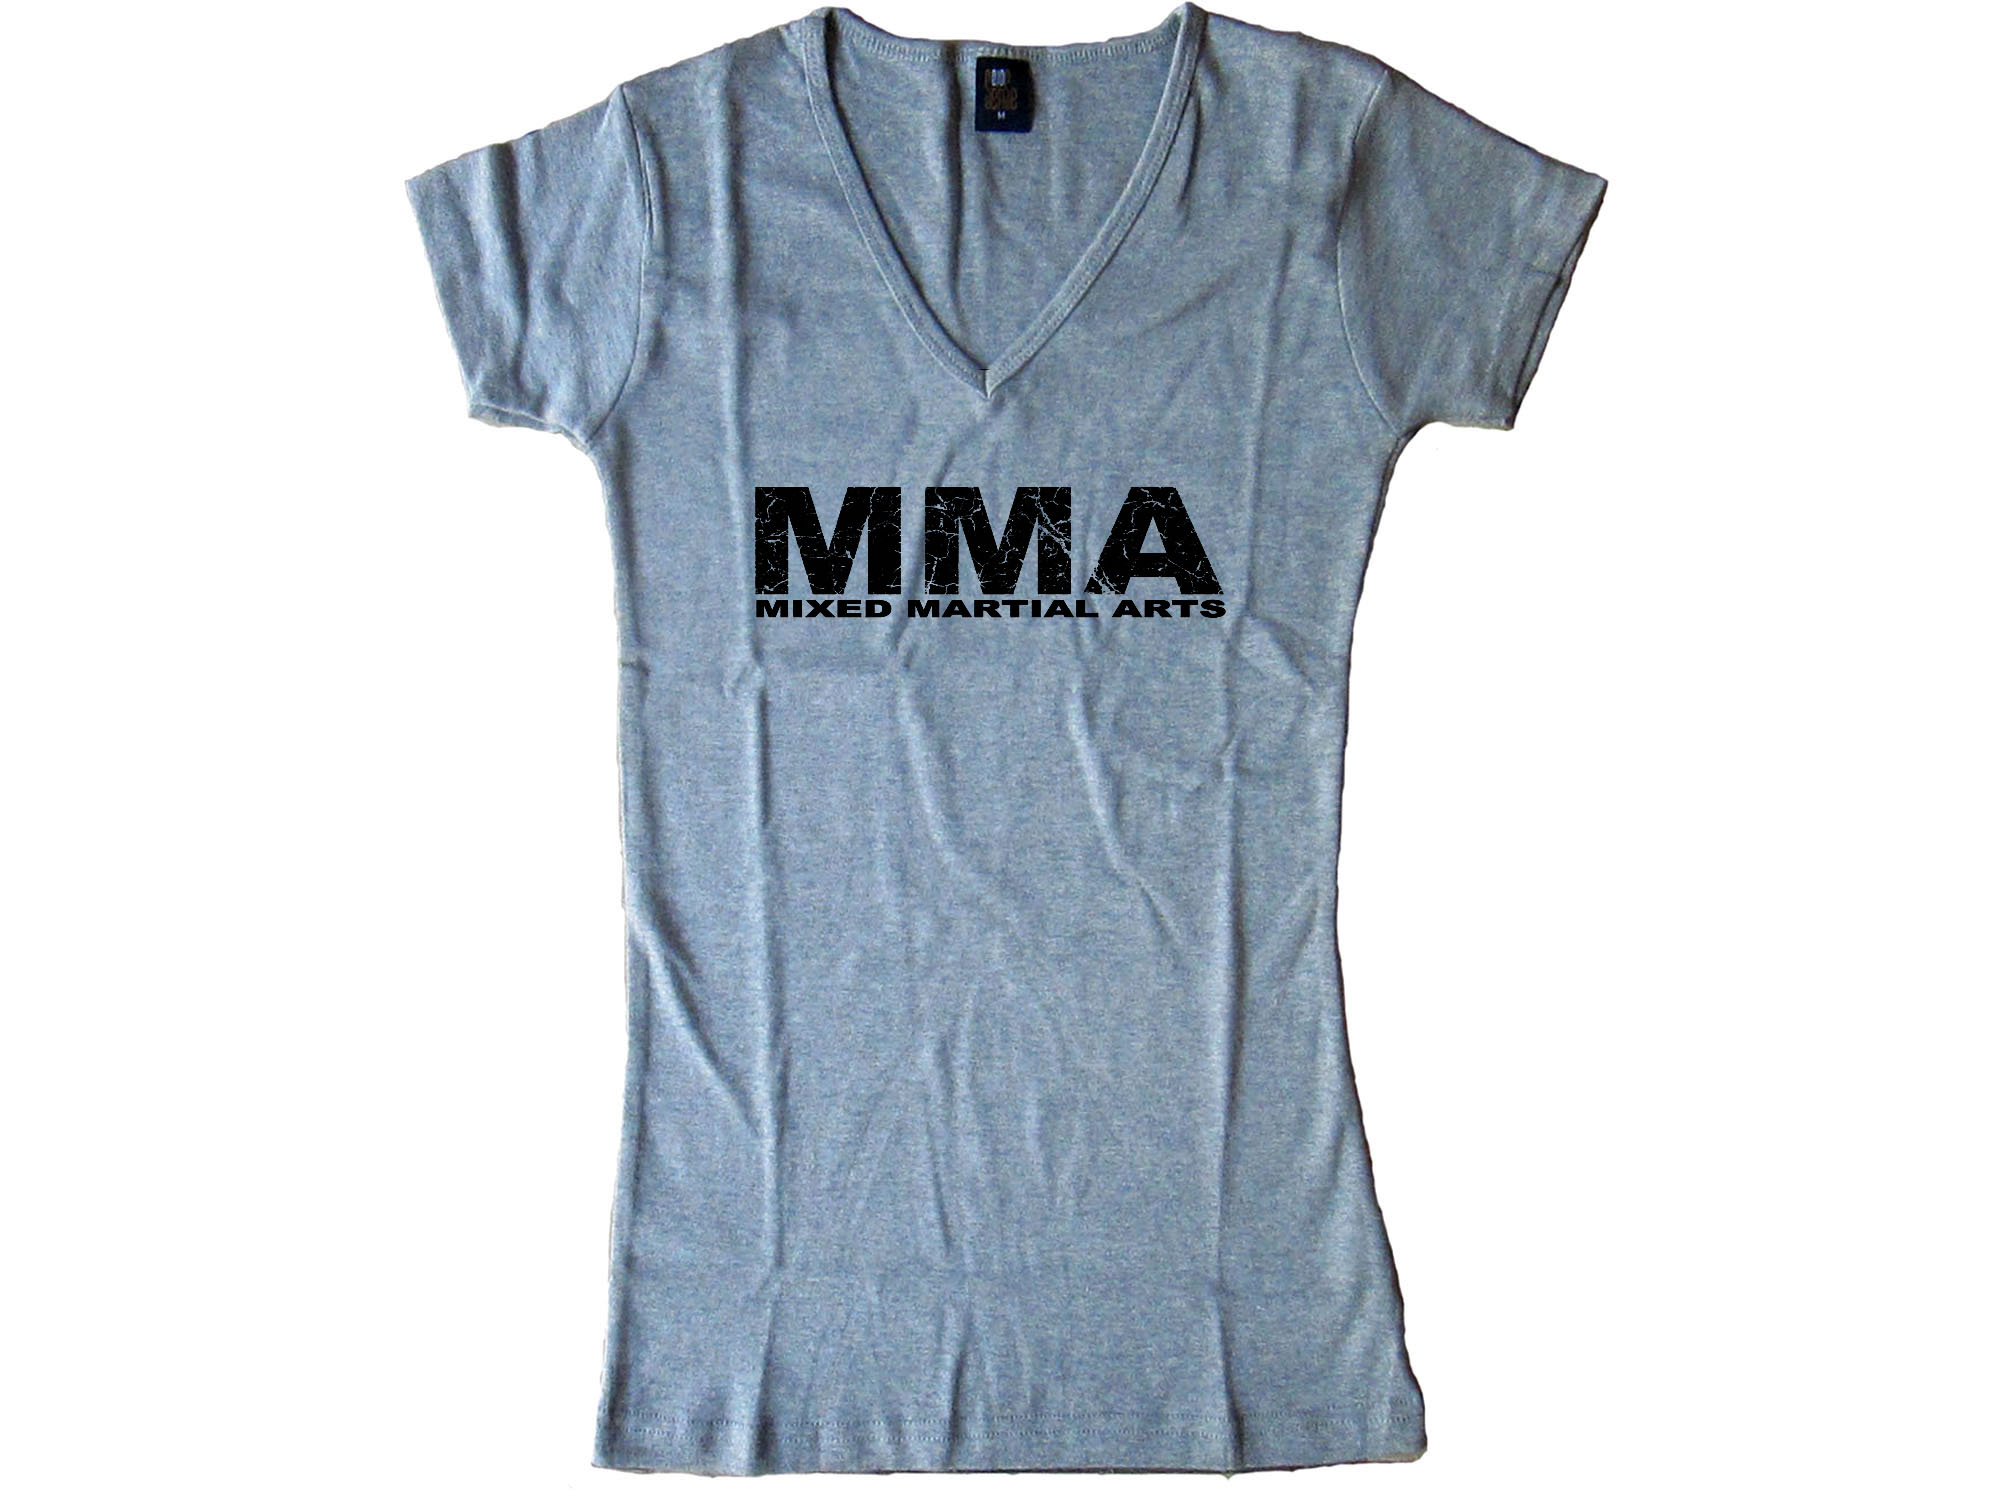 MMA mixed martial arts women or junior gray t-shirt